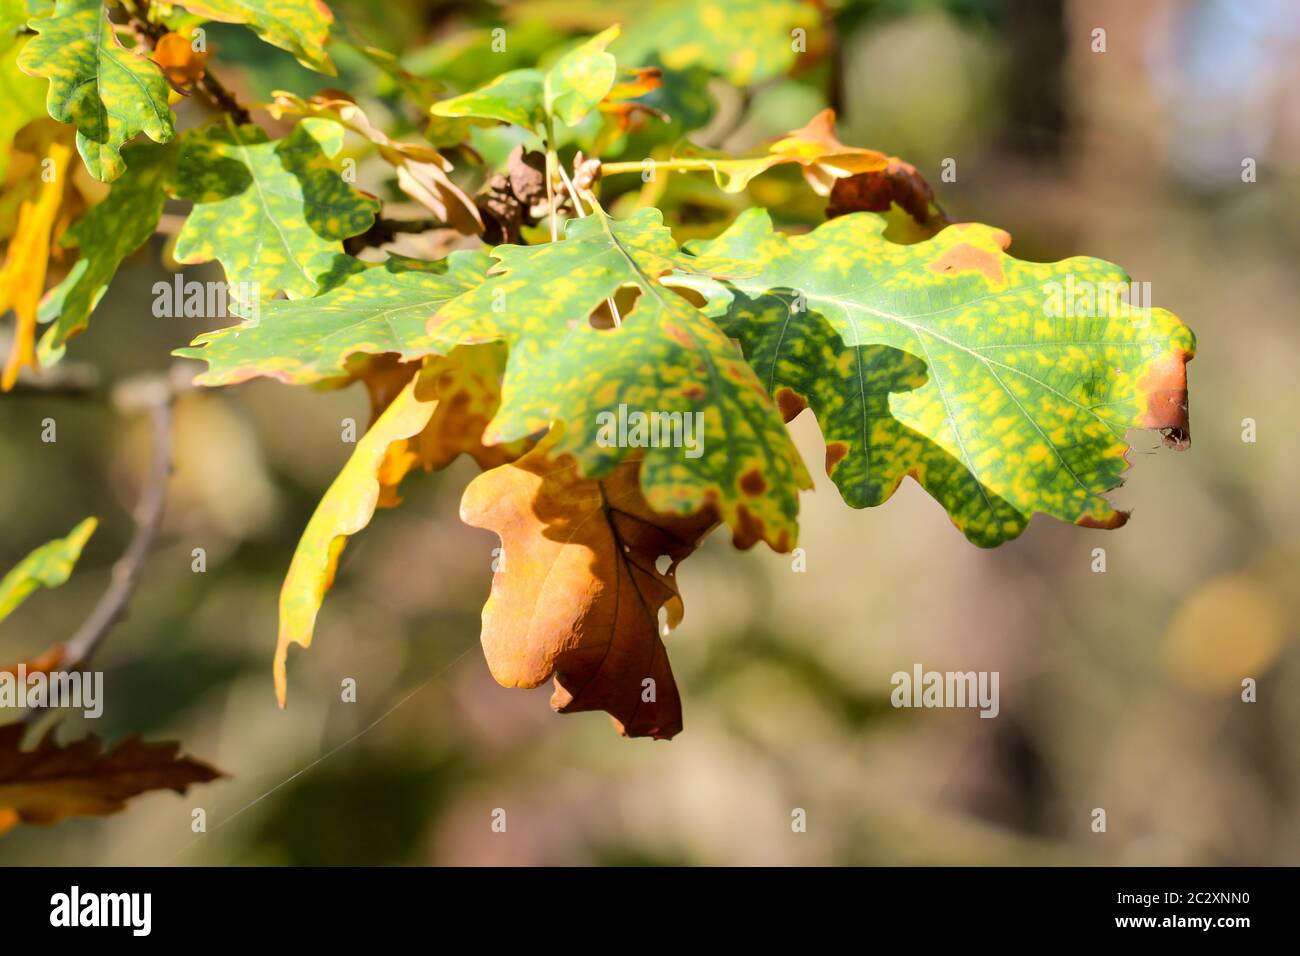 Autumn brings colorful oak leaves to the oak trees Stock Photo